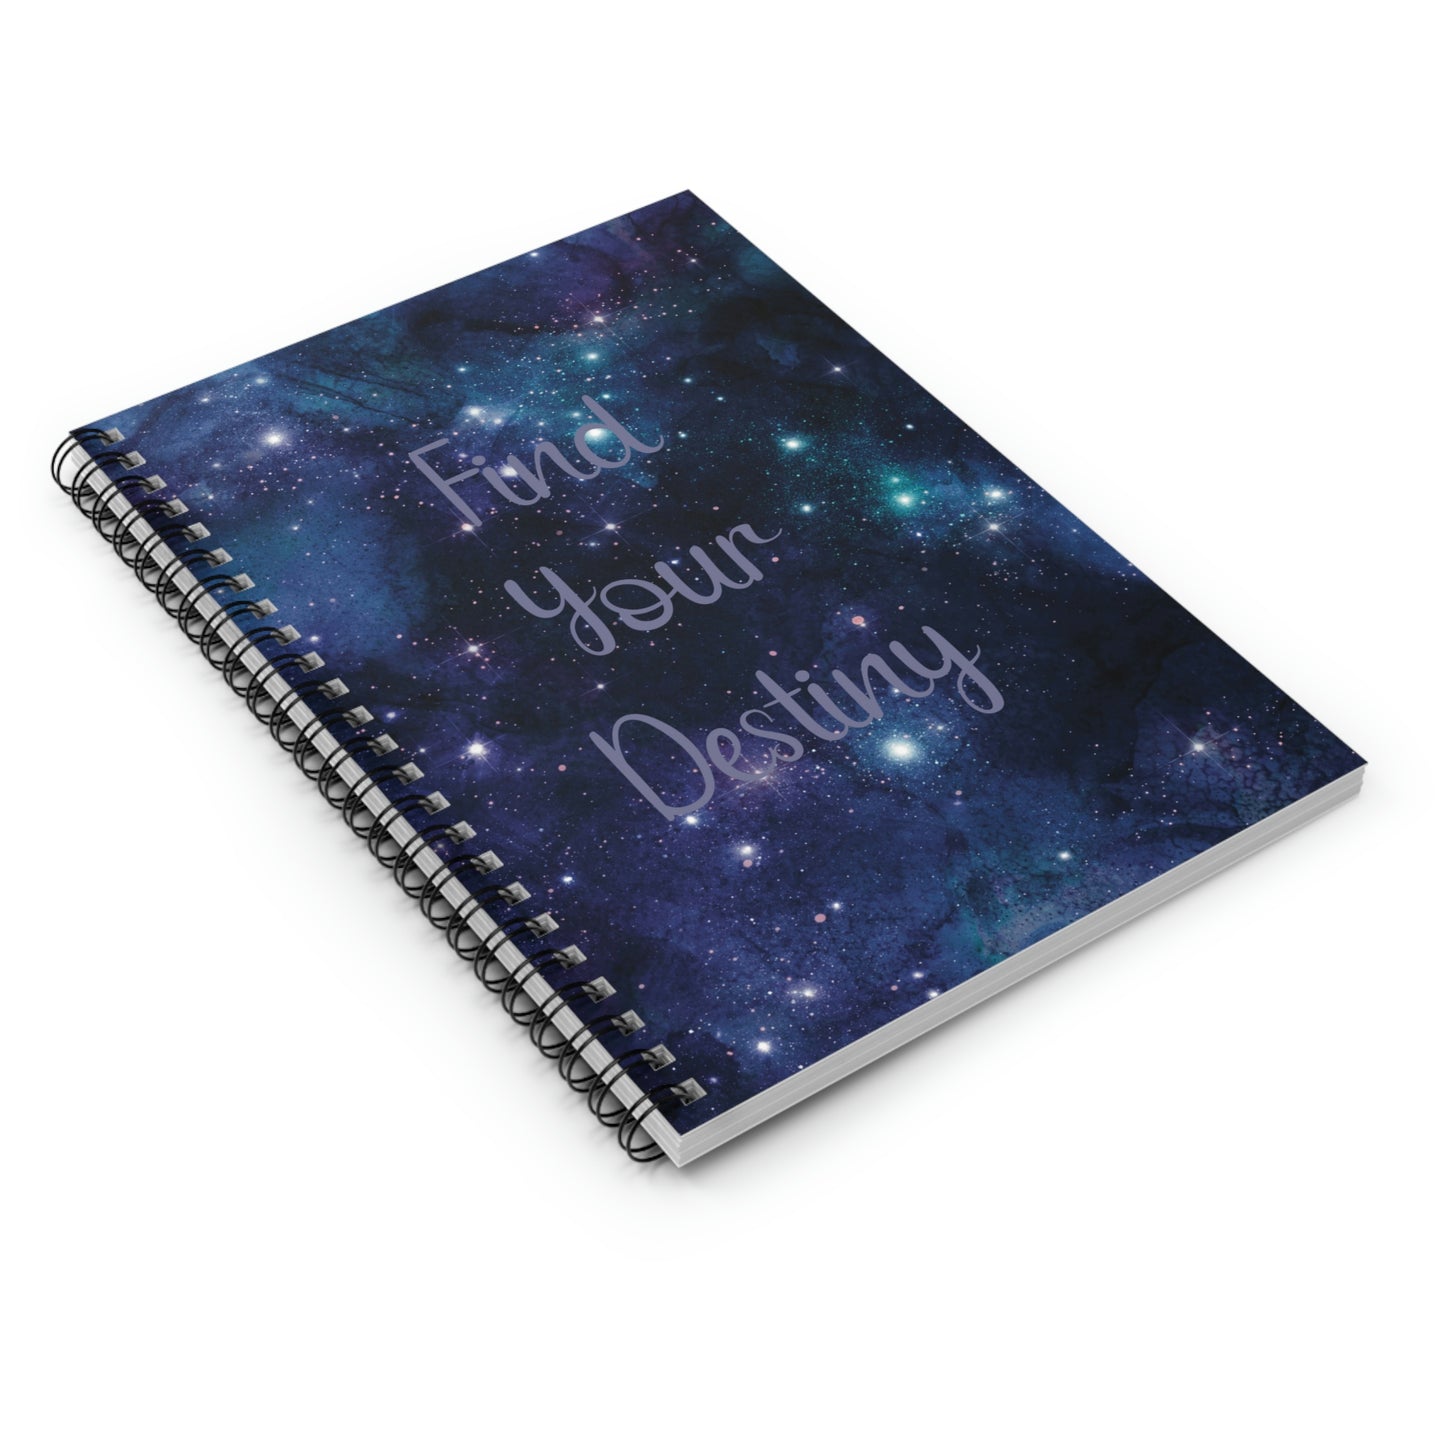 Find Your Destiny Spiral Notebook